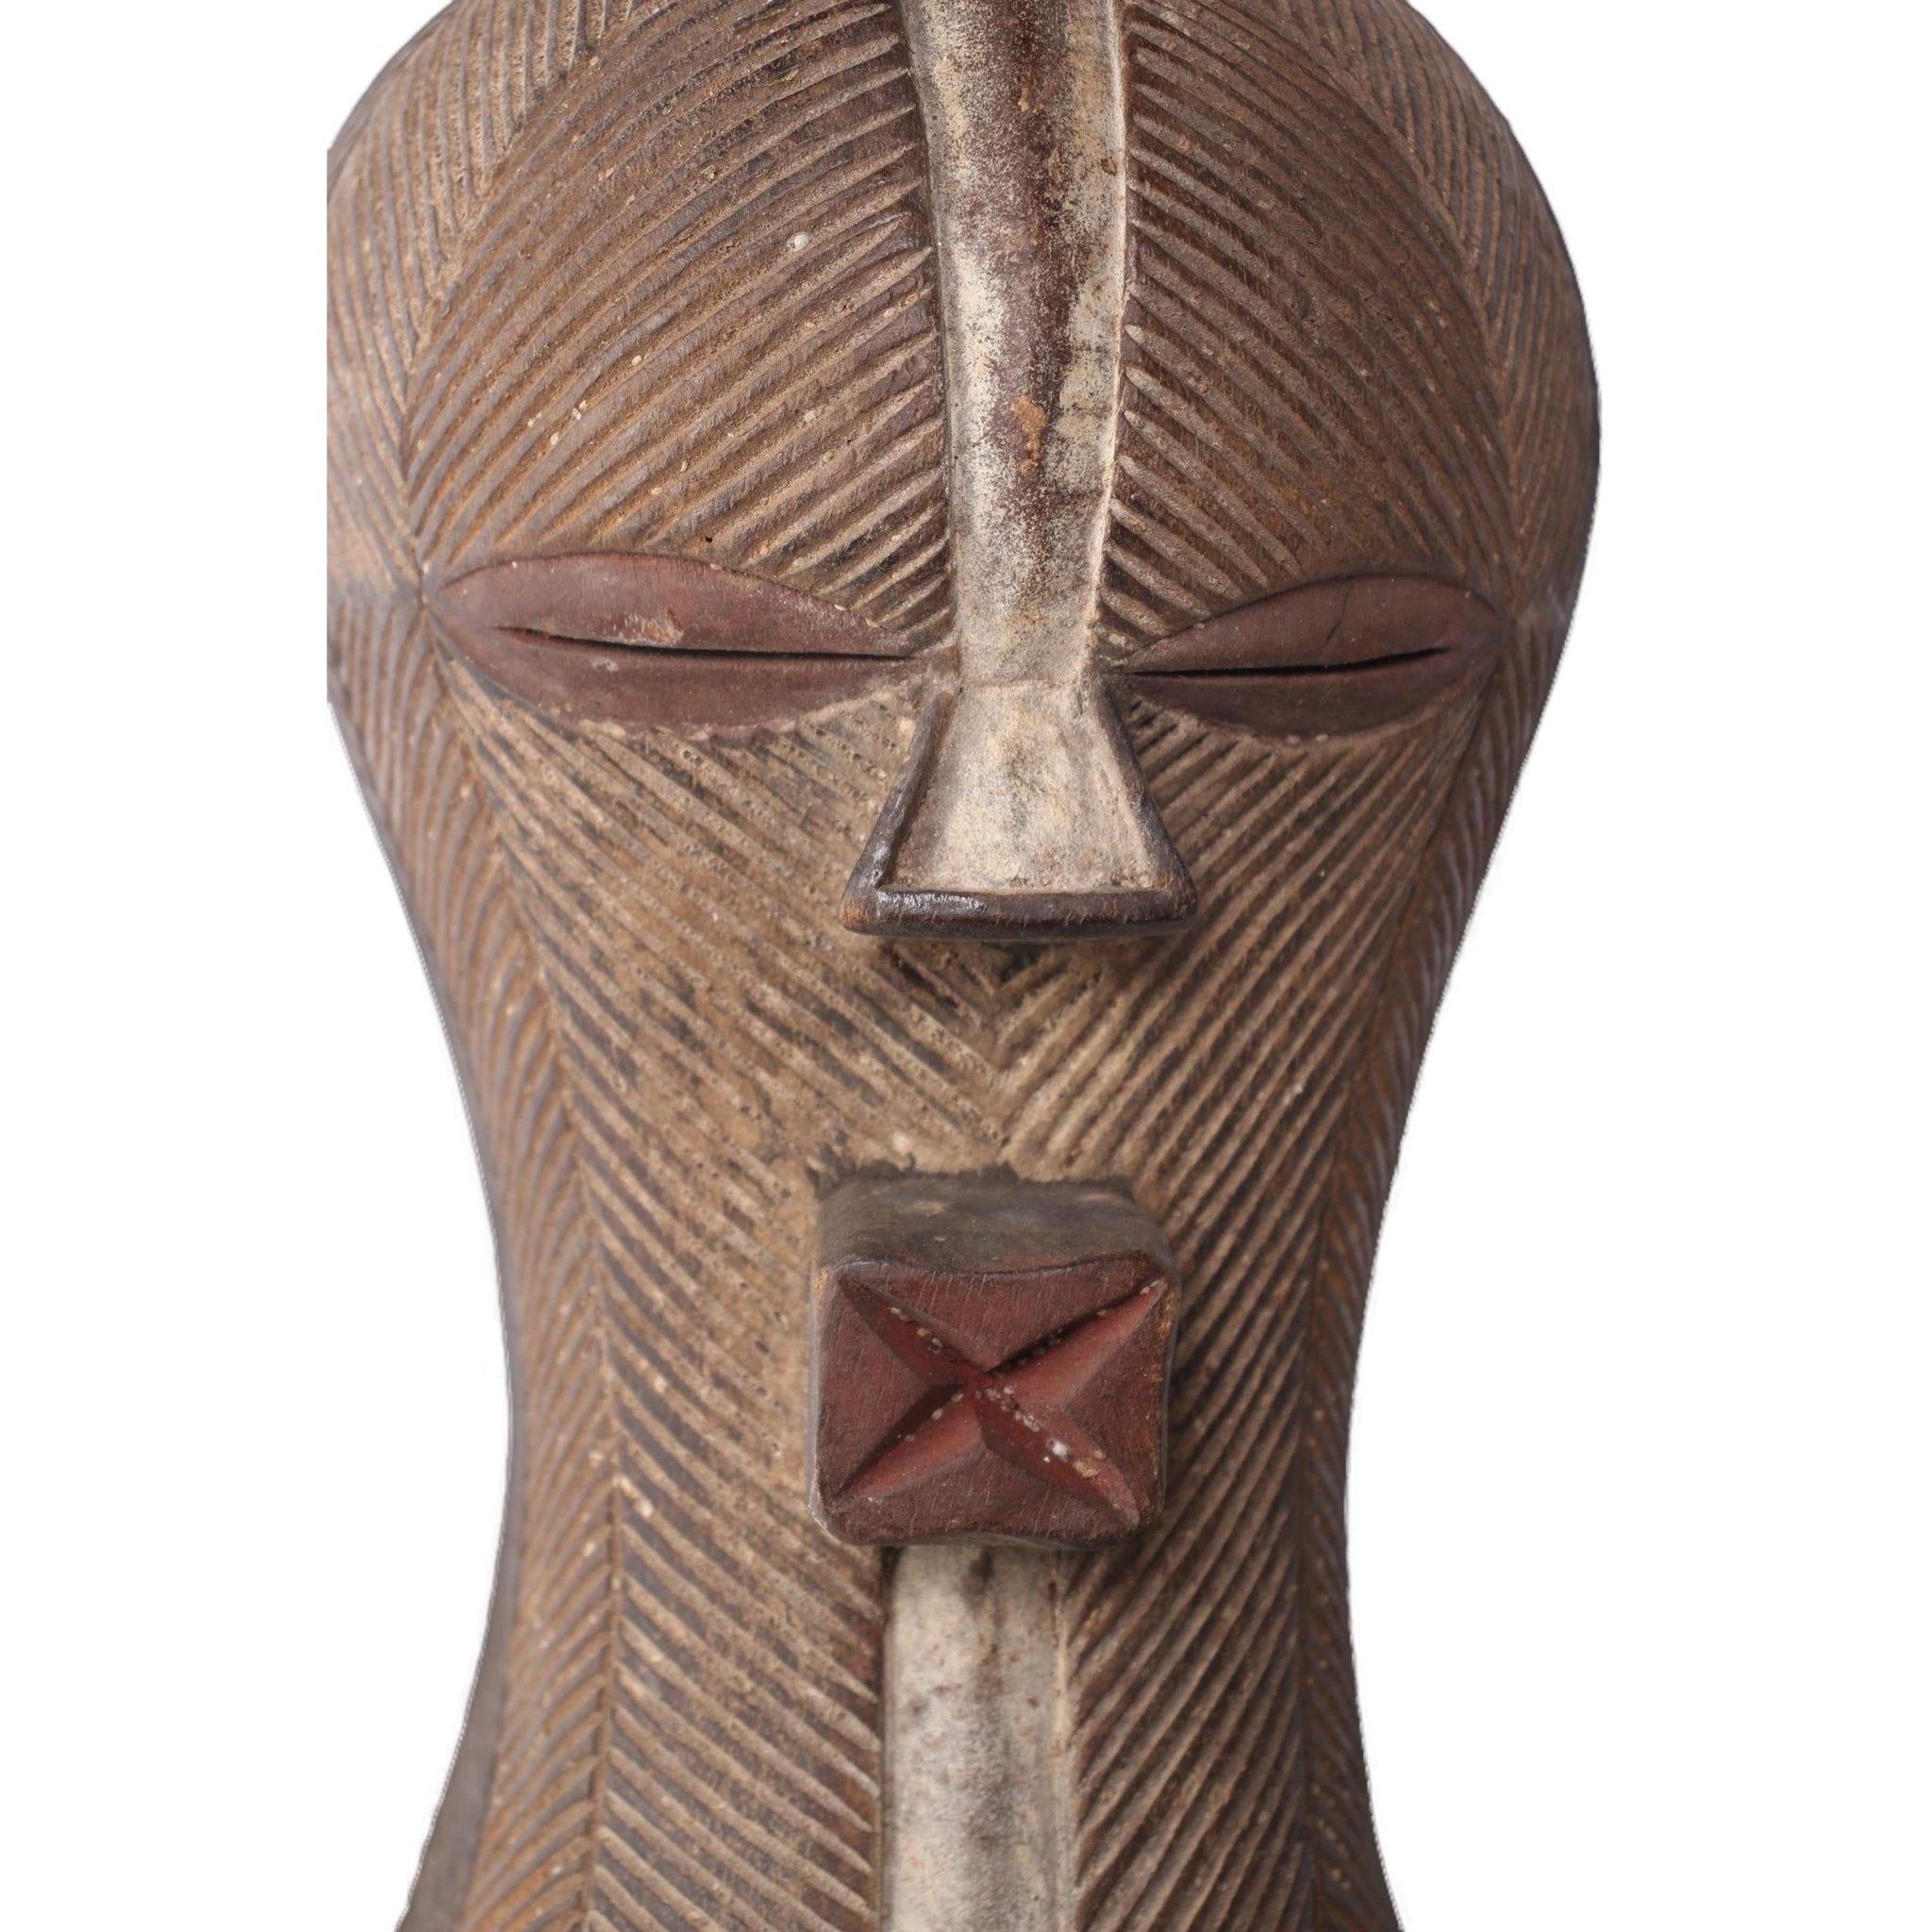 Basonge/Songye Tribe Mask ~12.2" Tall - African Angel Art - Mask